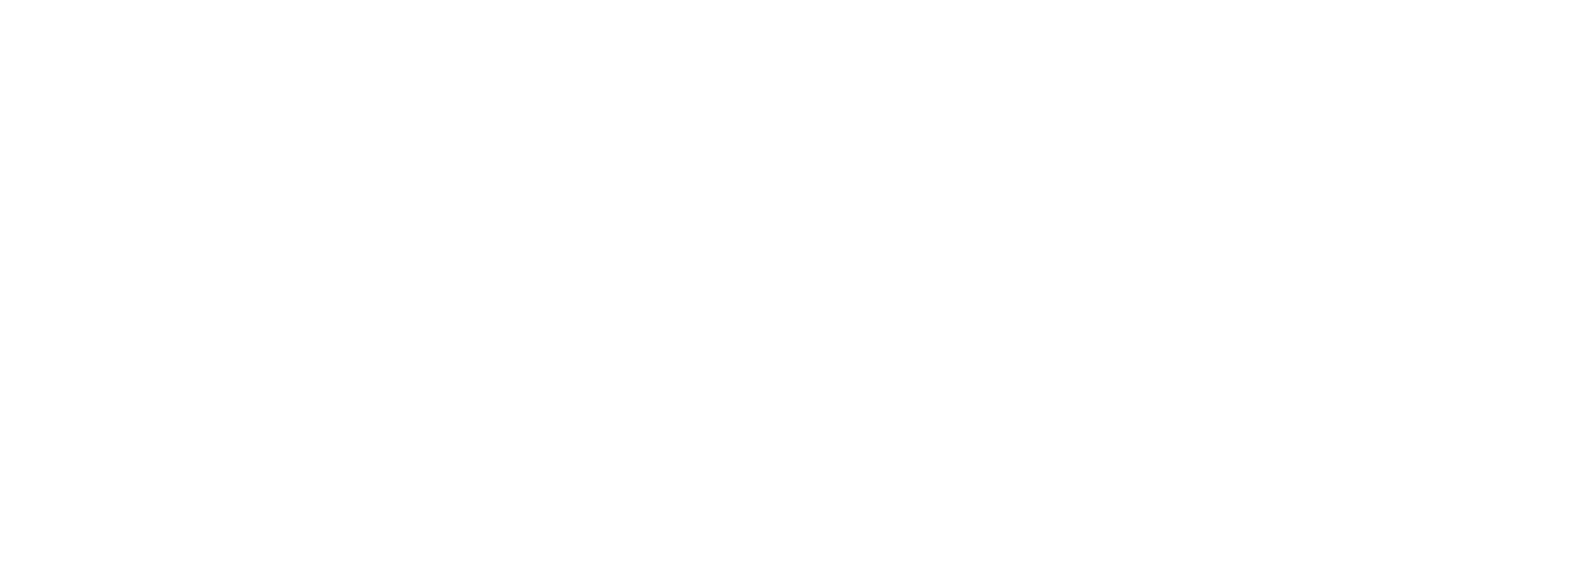 ElringKlinger logo grand pour les fonds sombres (PNG transparent)